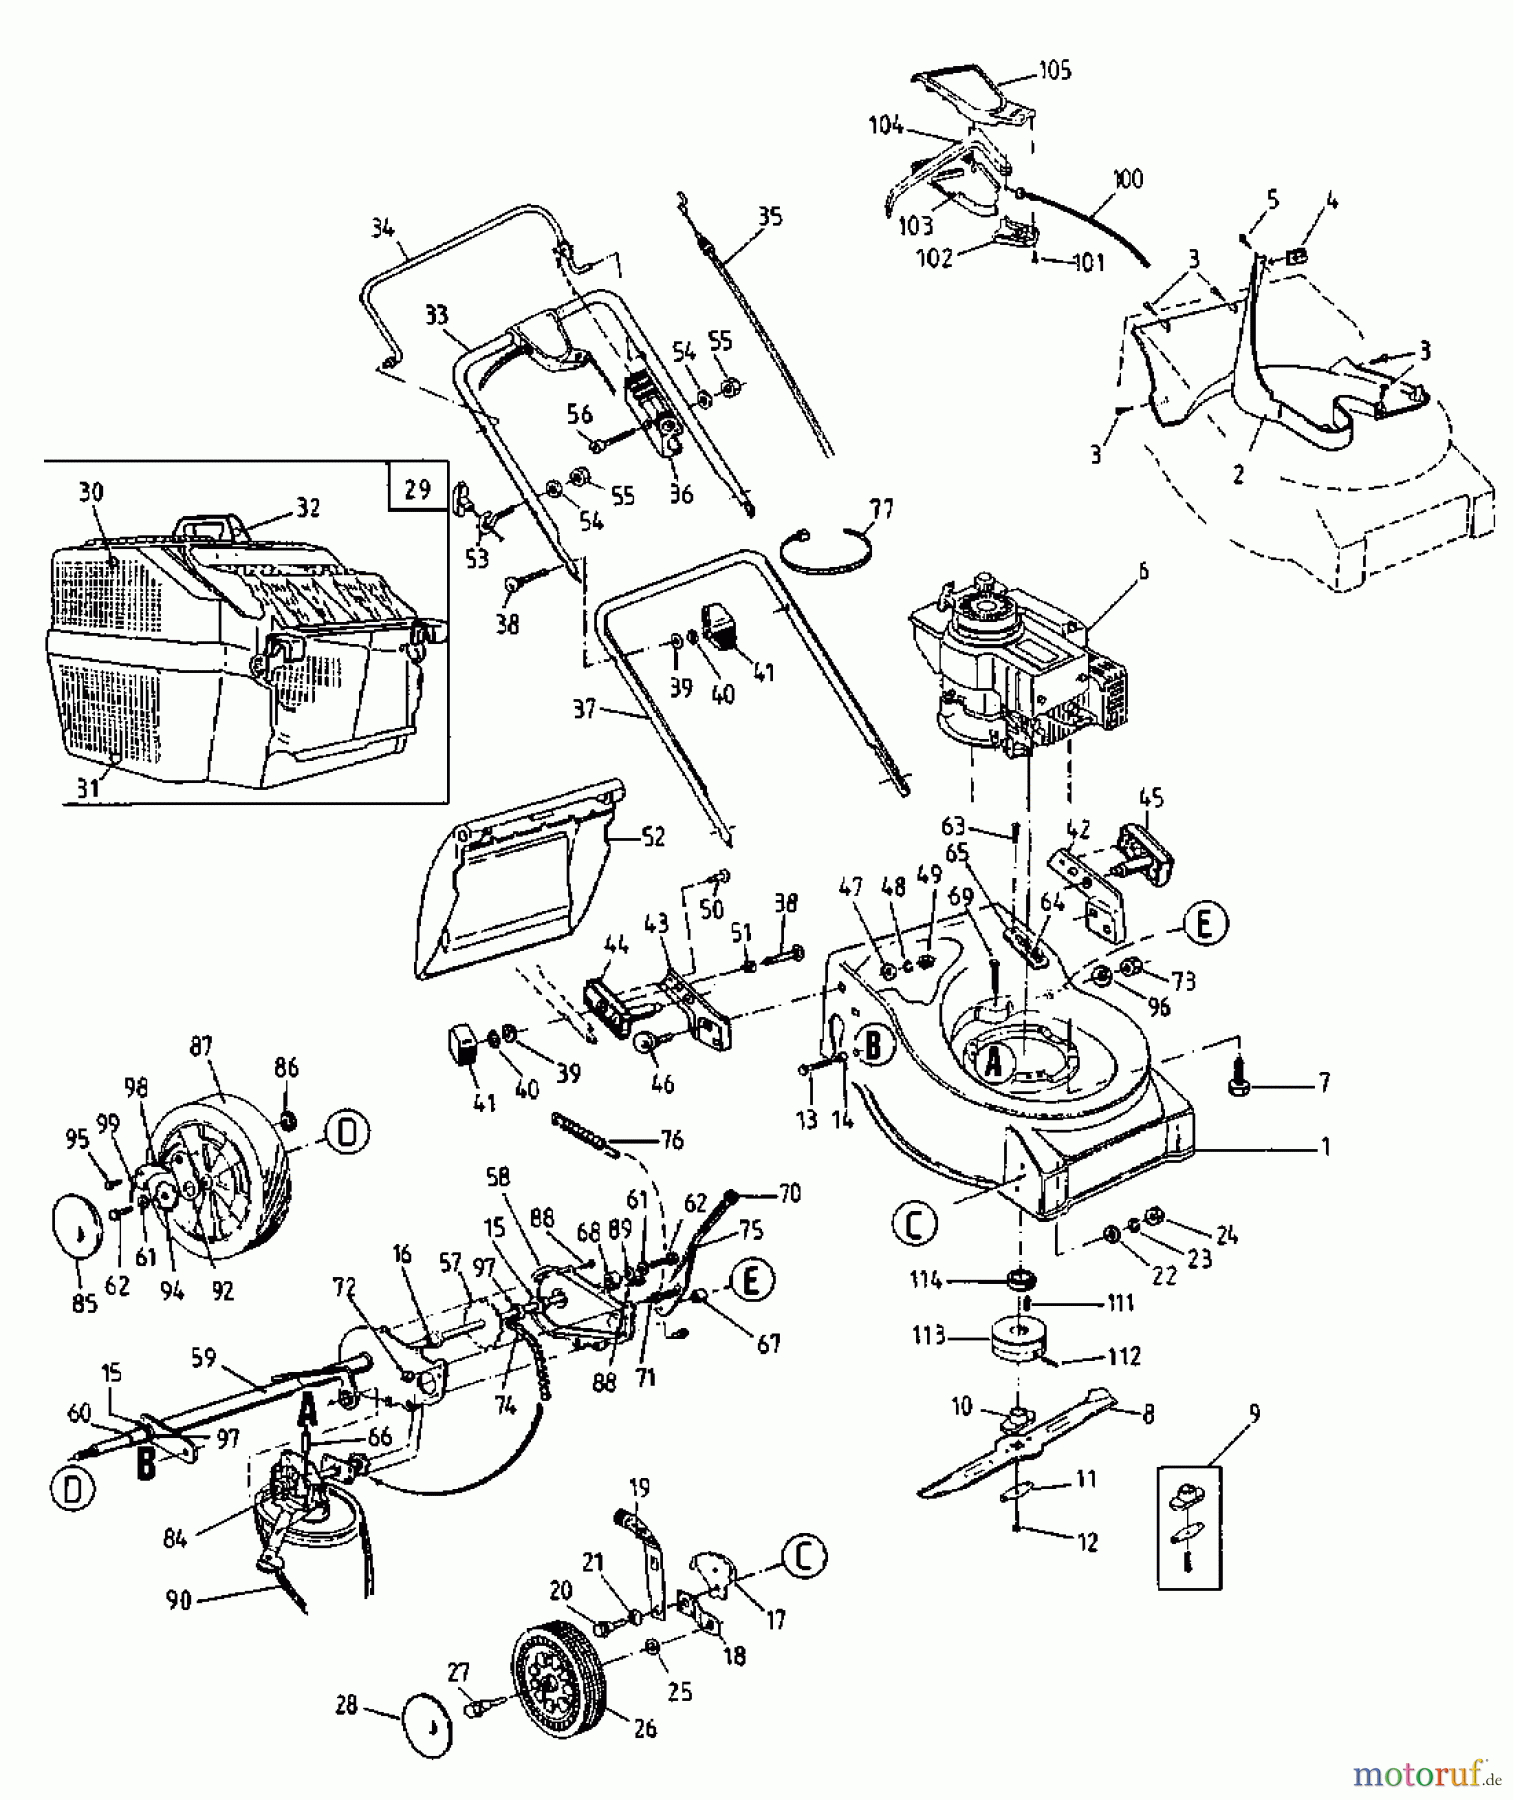  Mastercut Motormäher mit Antrieb GS 46-4 12C-684A659  (2000) Grundgerät